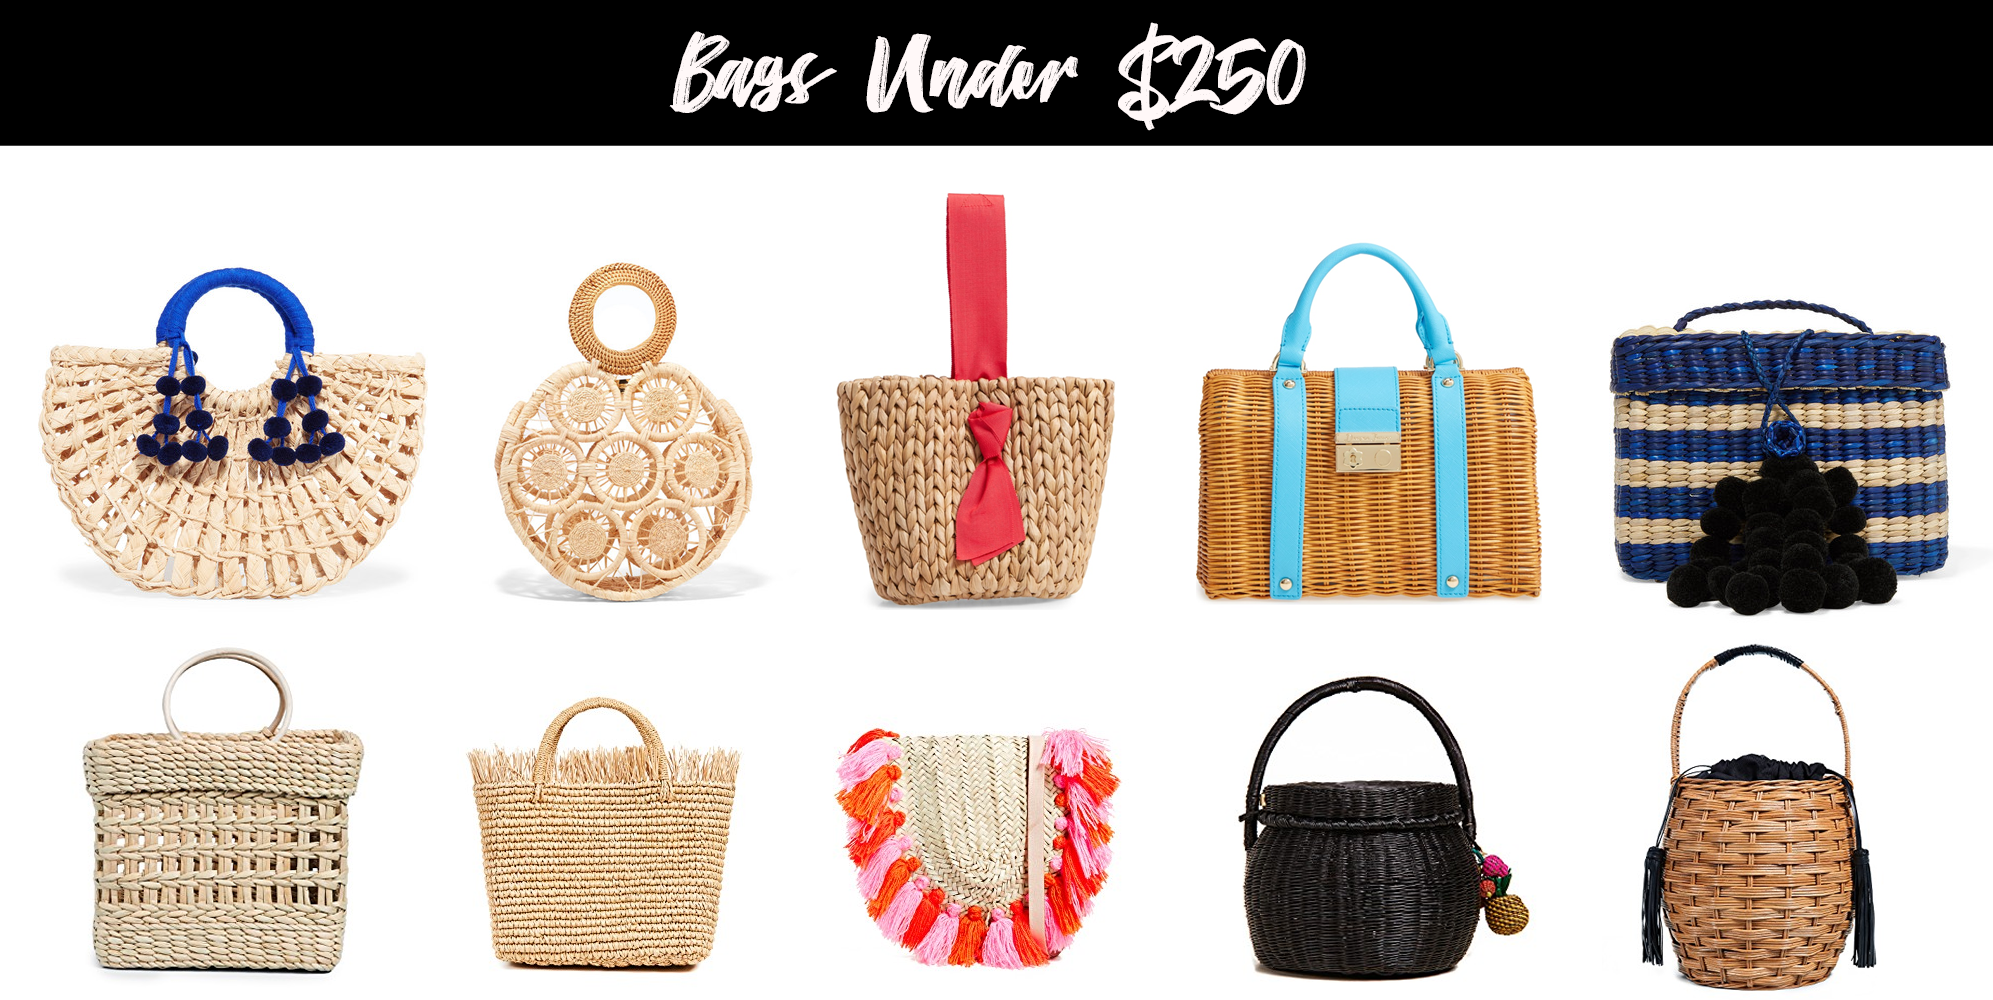 Summer Straw Bags Under $250 / Pamela Munson